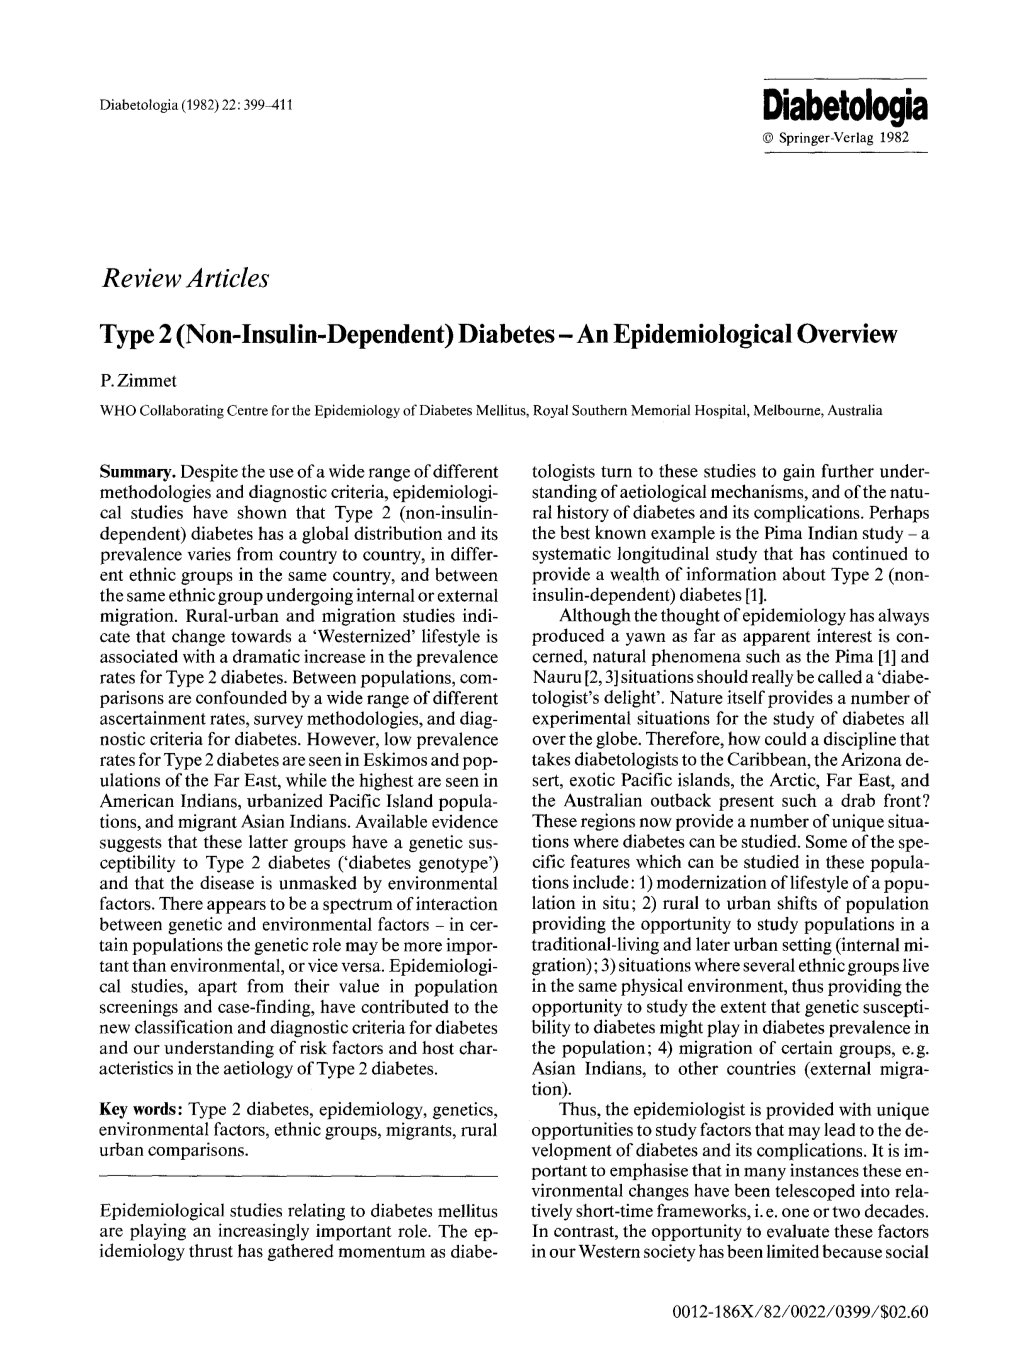 (Non-Insulin-Dependent) Diabetes &#X2014; an Epidemiological Overview